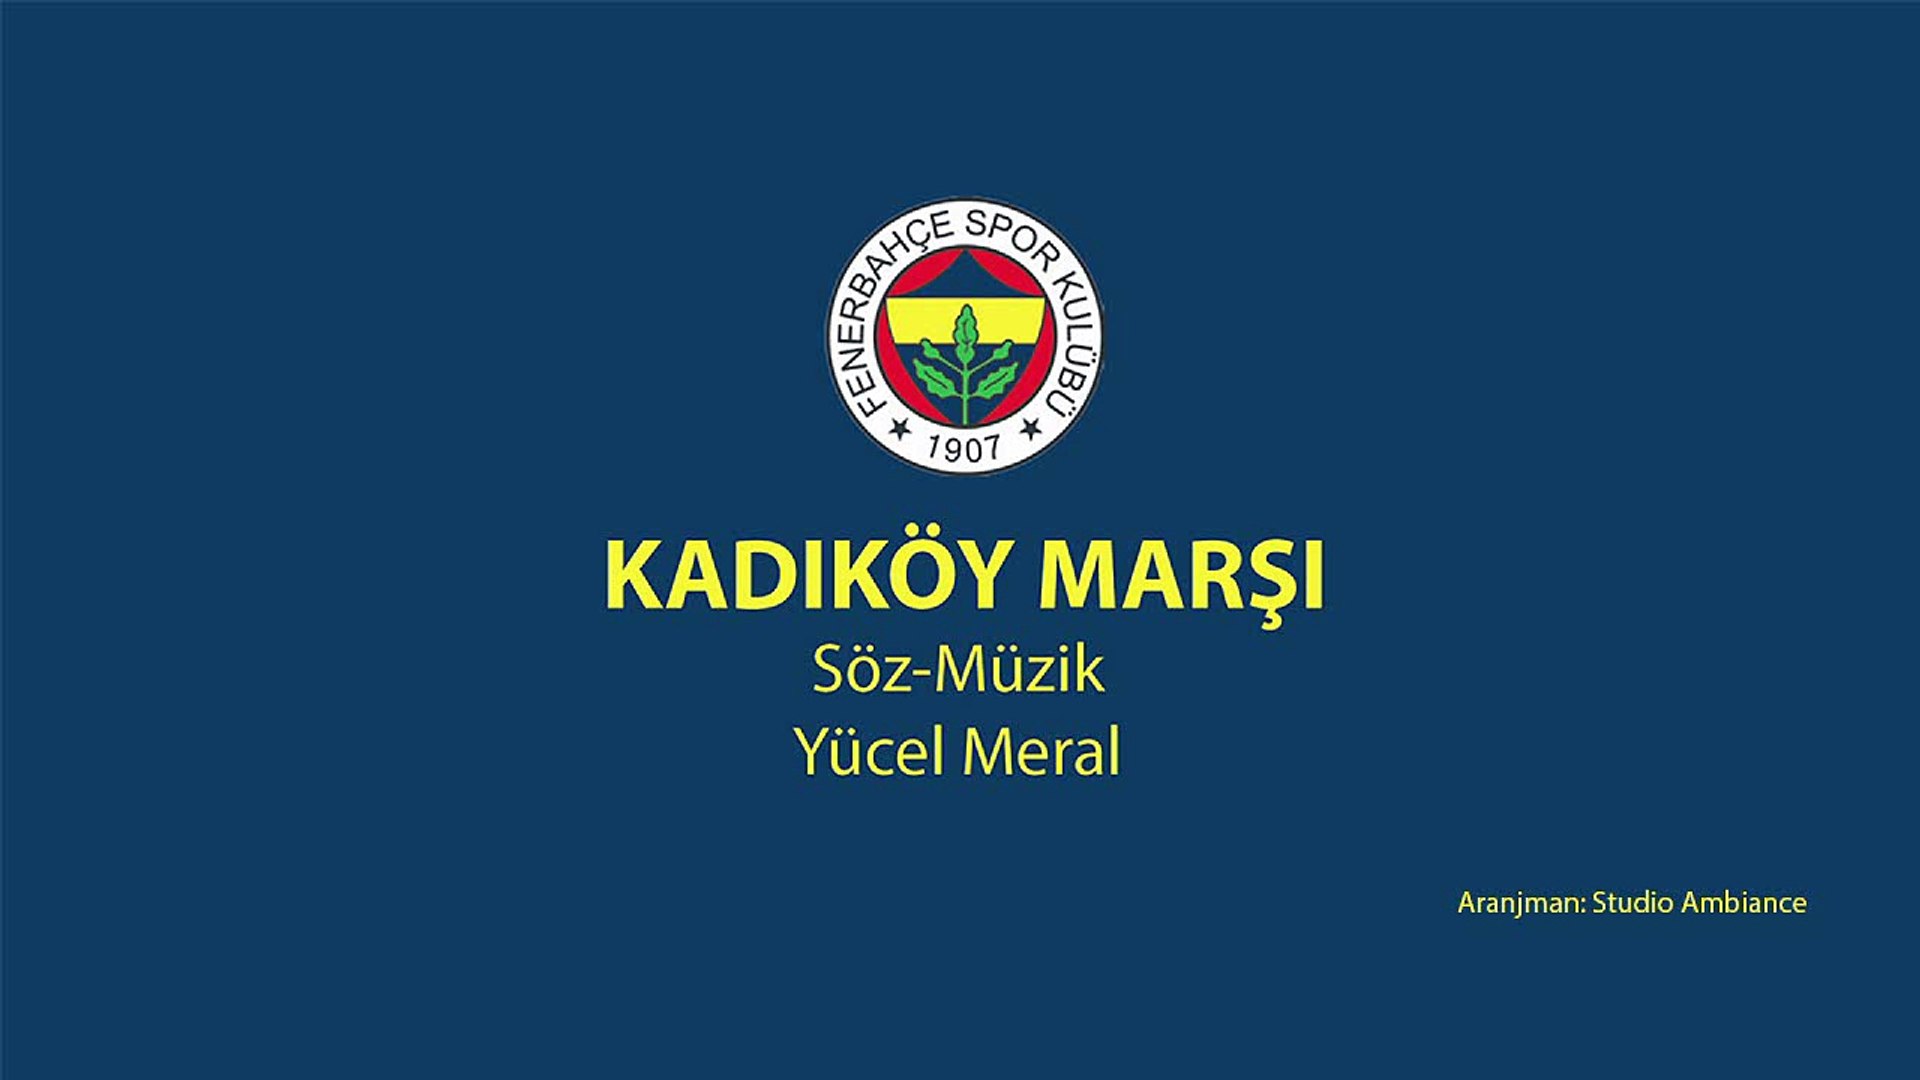 Fenerbahçe Marşları - Kadıköy Marşı (Yeni) - Dailymotion Video